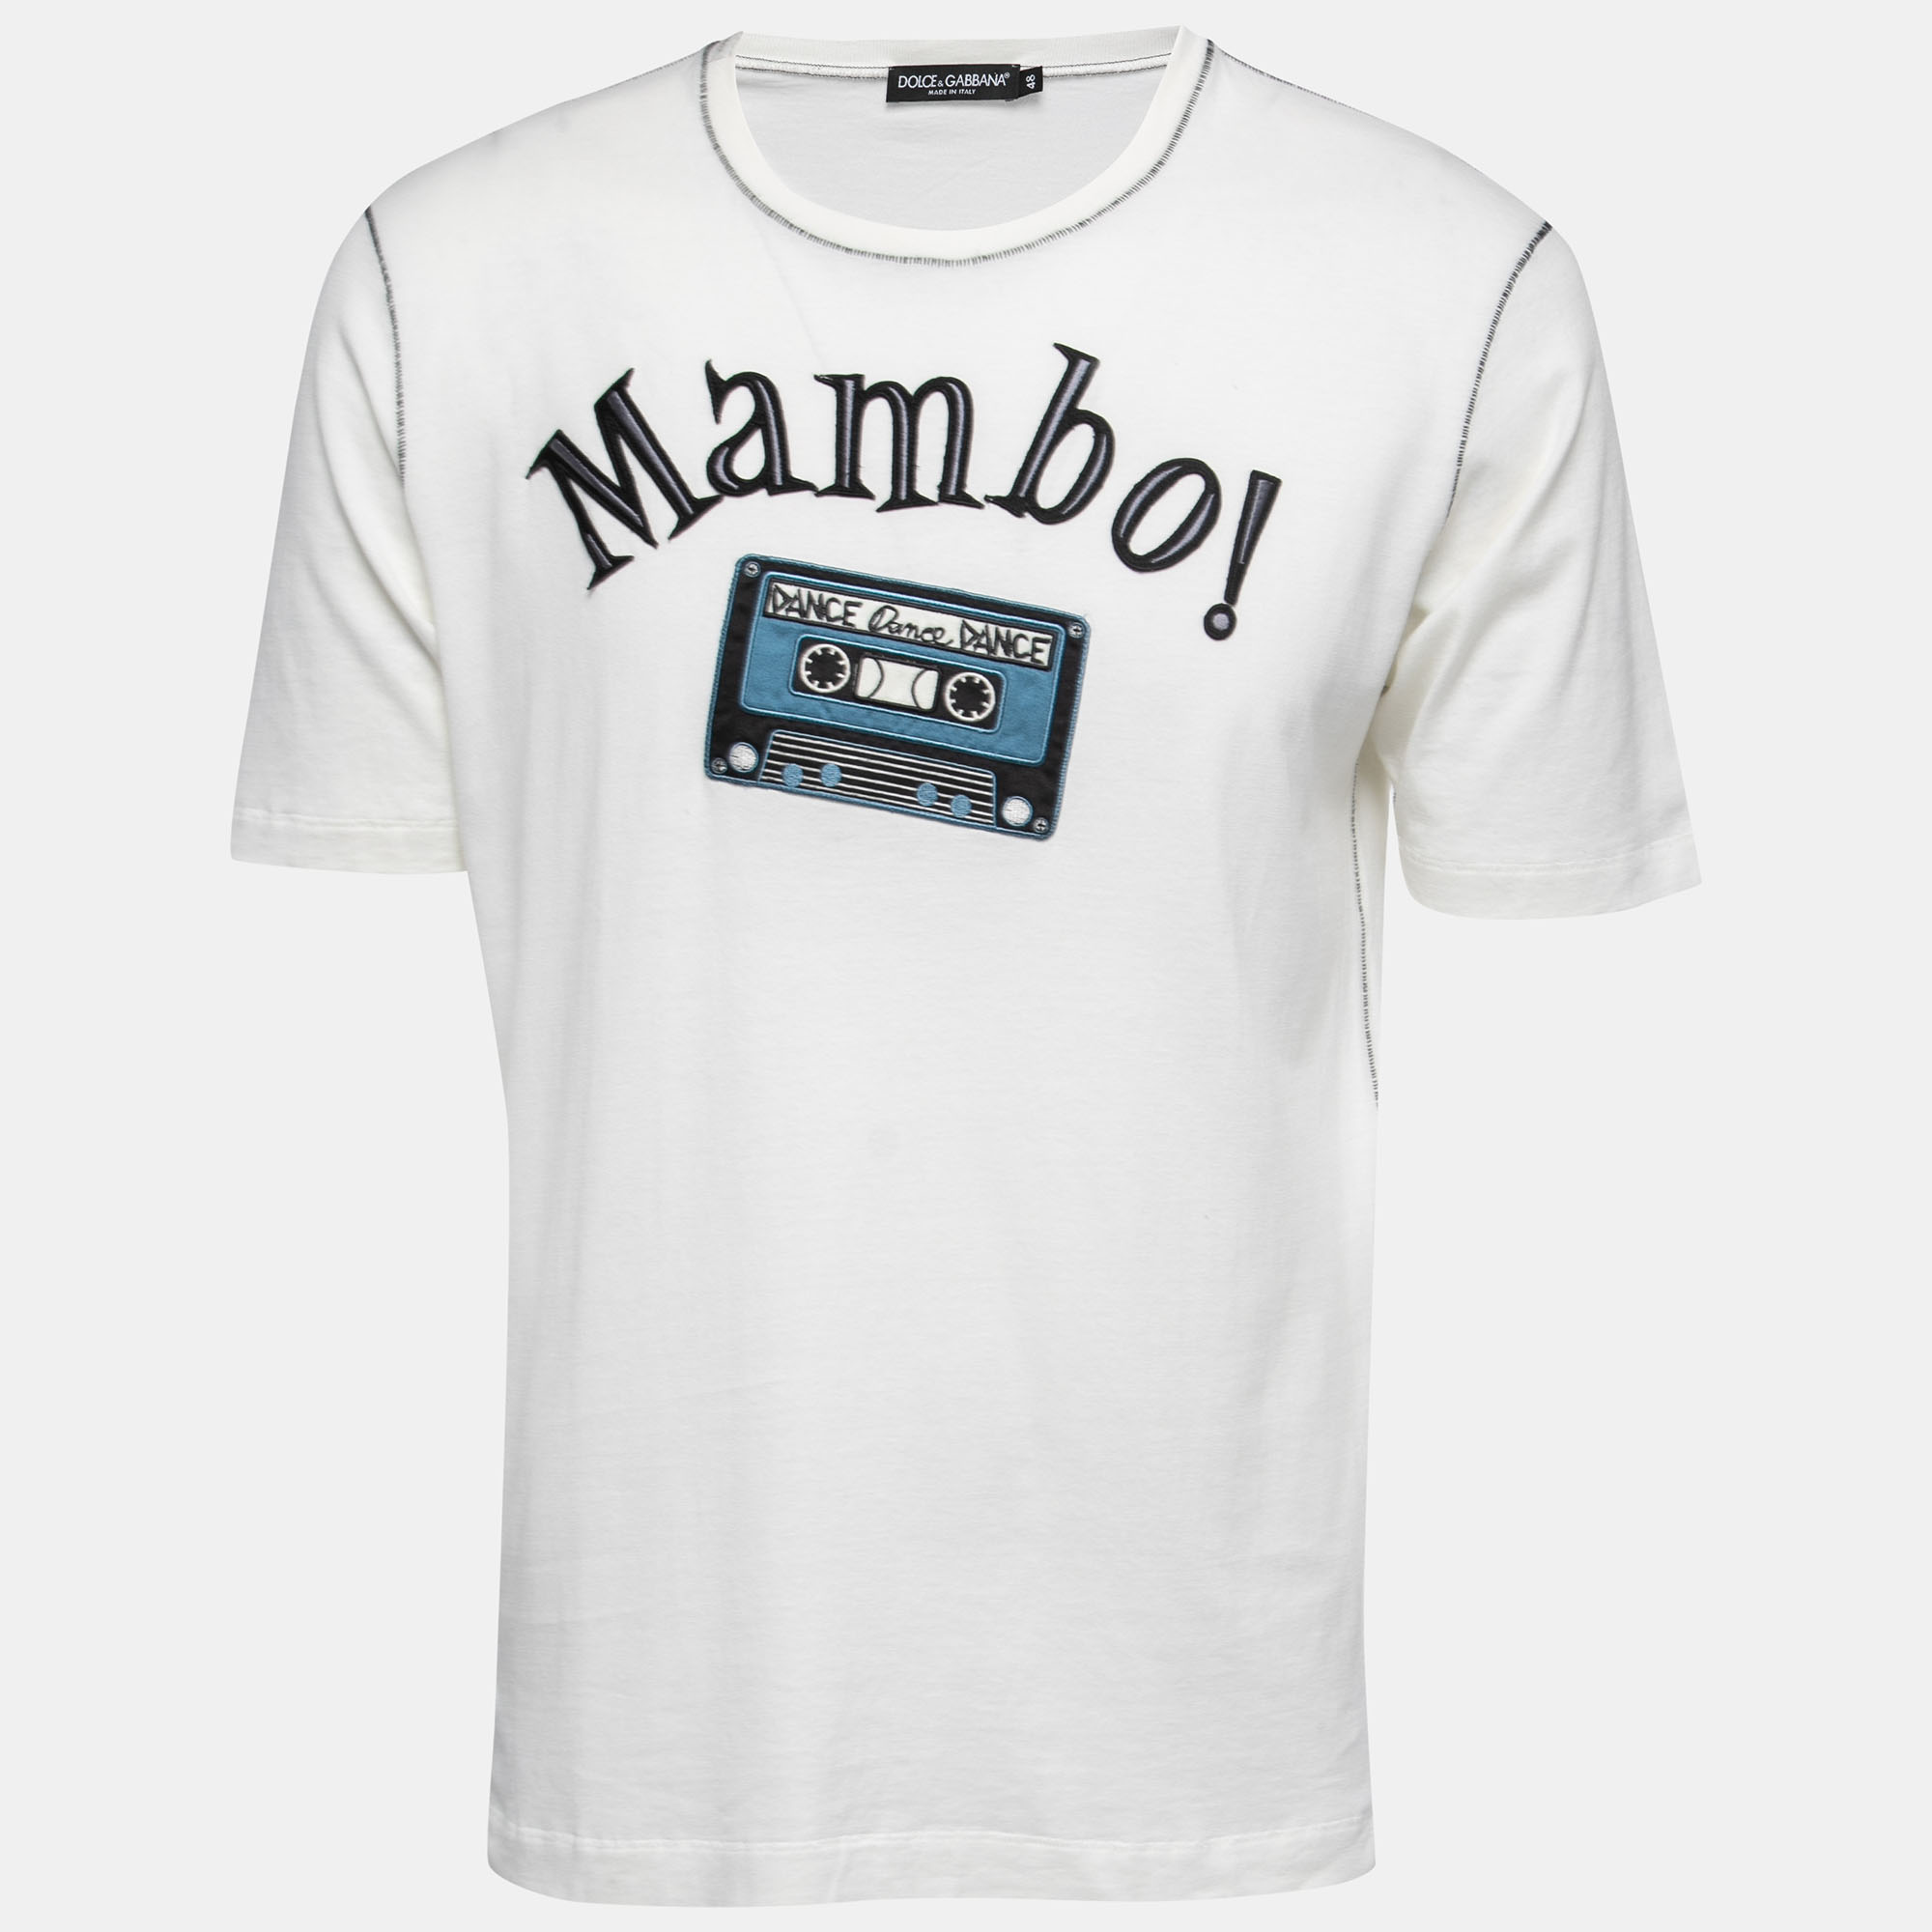 Dolce & Gabbana Off White Mambo Embroidered Crew Neck Half Sleeve T-shirt M